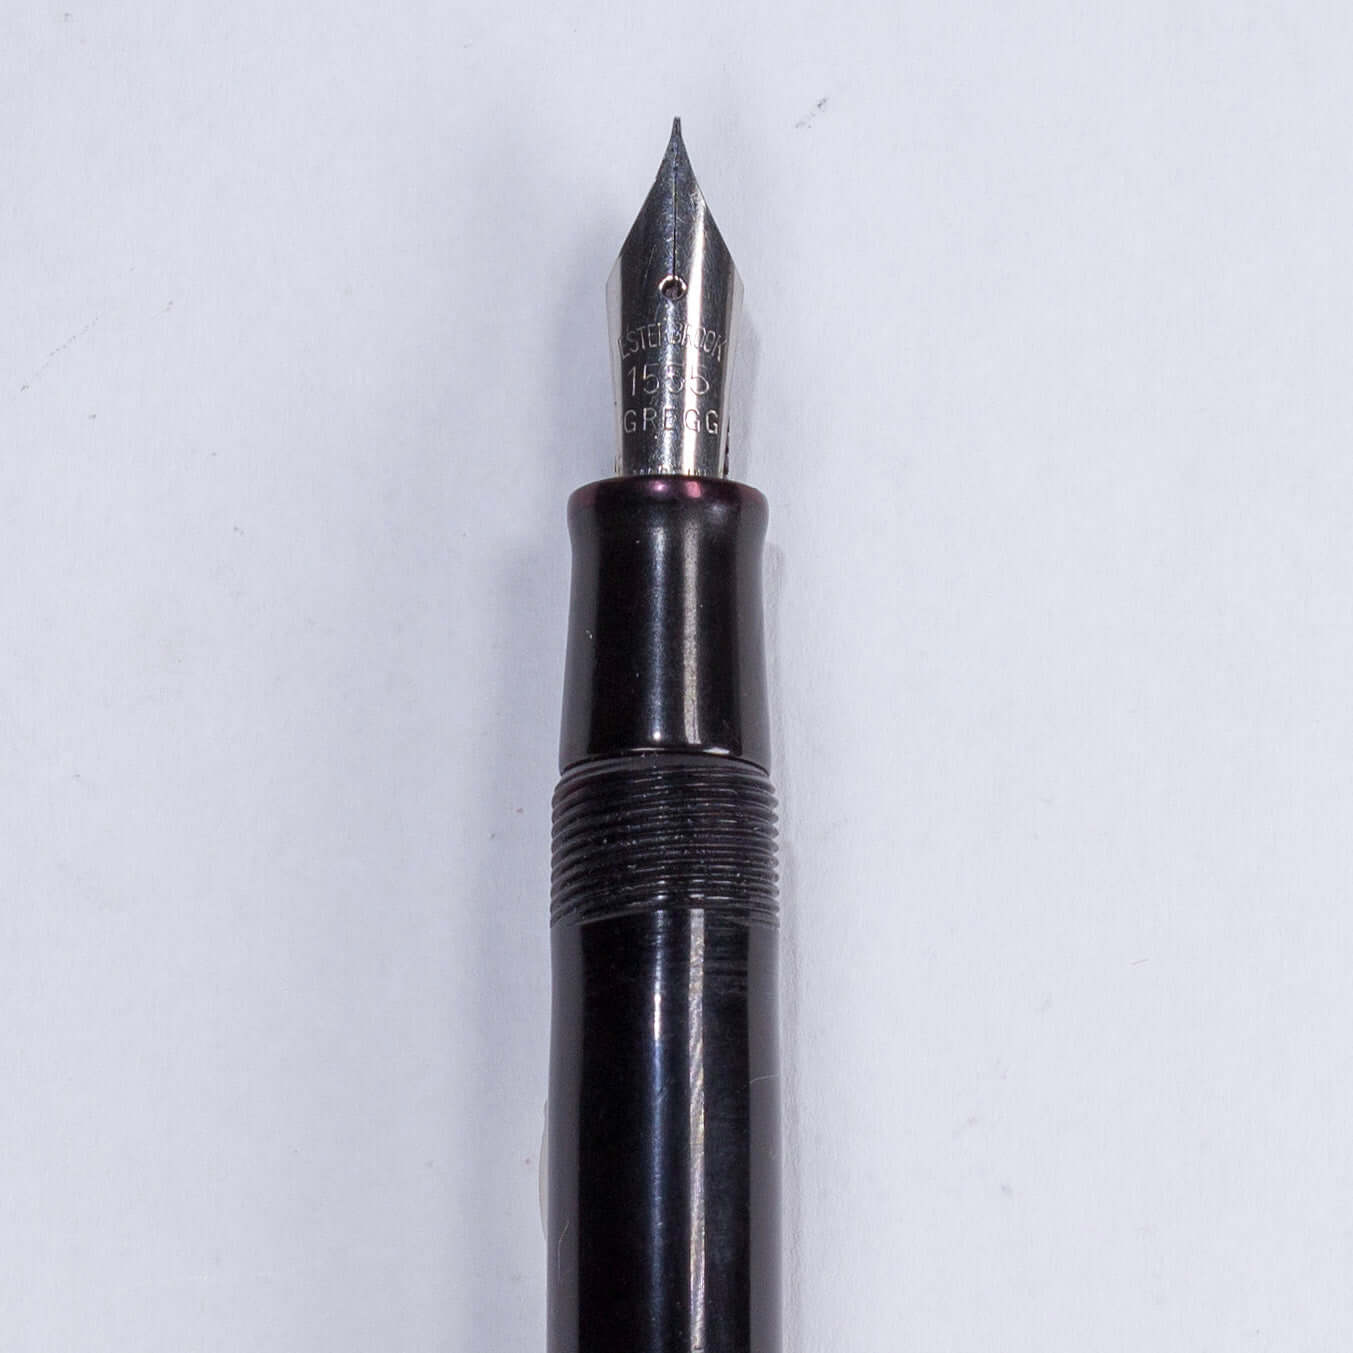 Esterbrook Model SJ Fountain Pen, Black, Restored Lever Filler, #1555 Firm Fine Gregg nib, Double Jewel